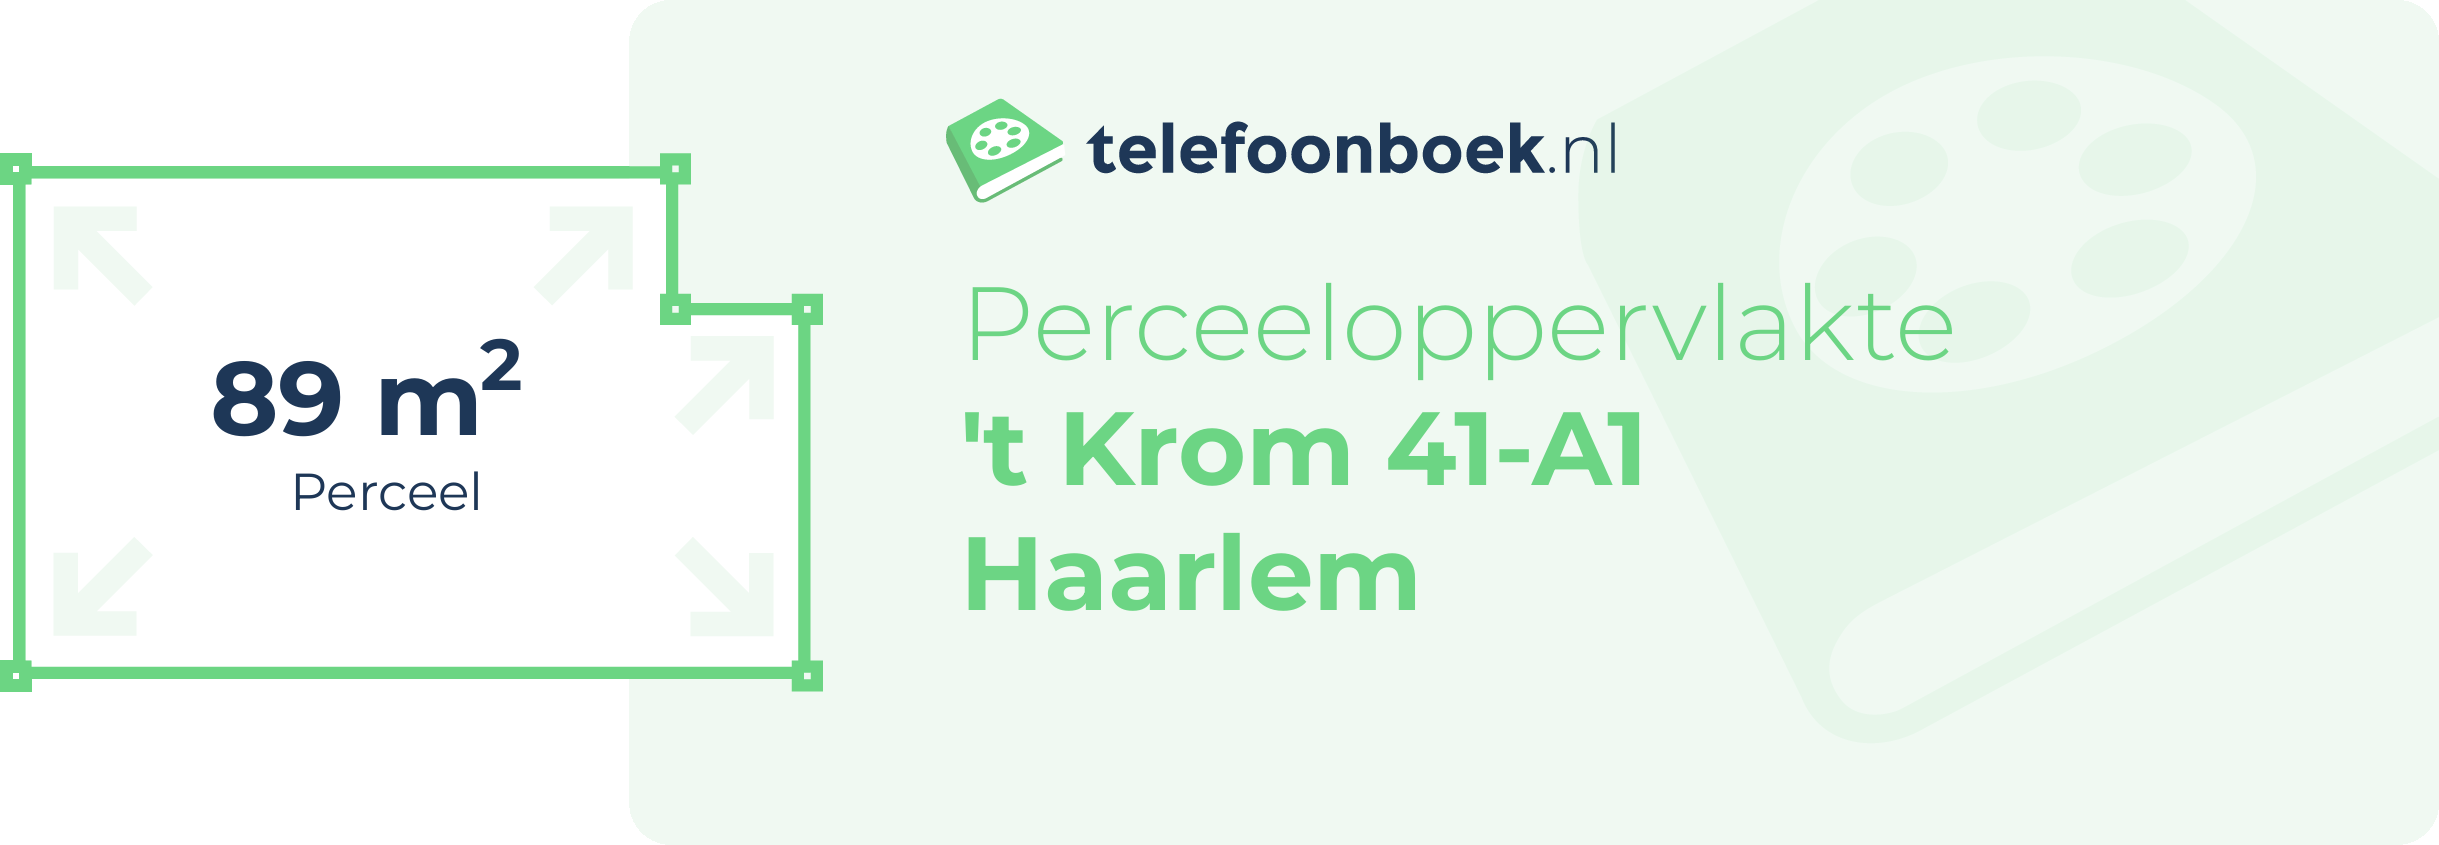 Perceeloppervlakte 't Krom 41-A1 Haarlem